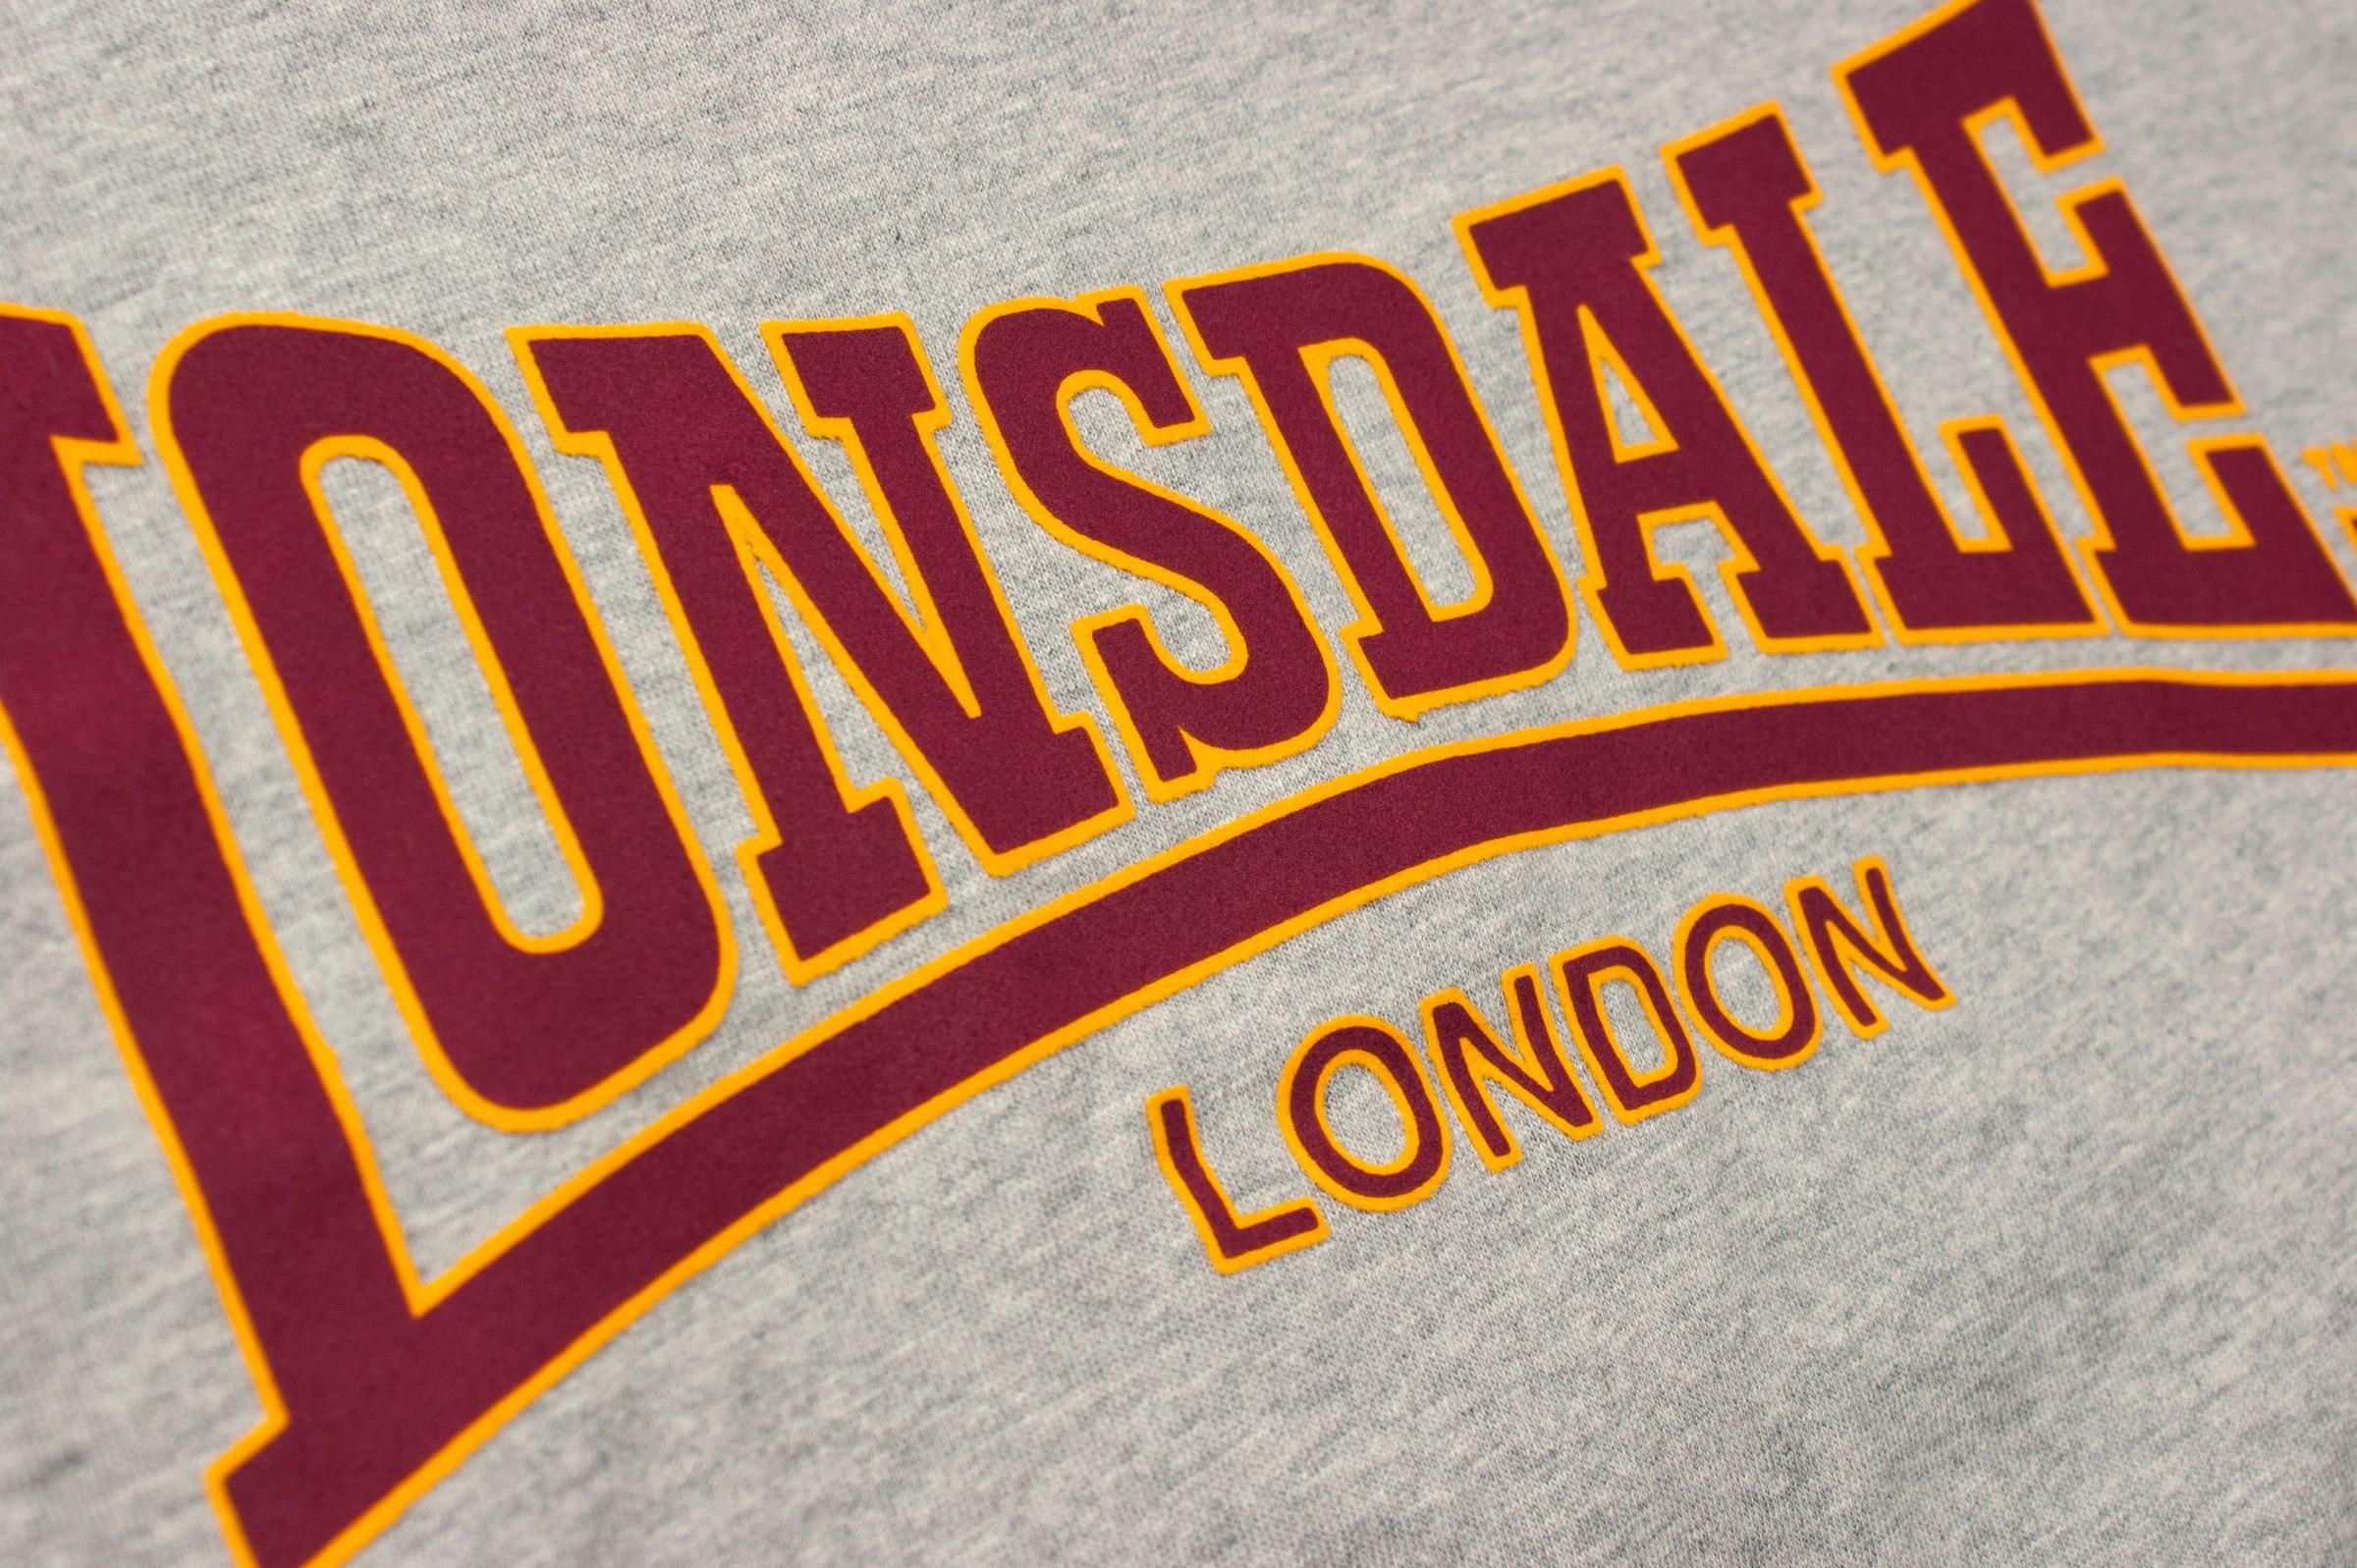 Lonsdale T-Shirt Lonsdale Adult Classic navy Herren T-Shirt